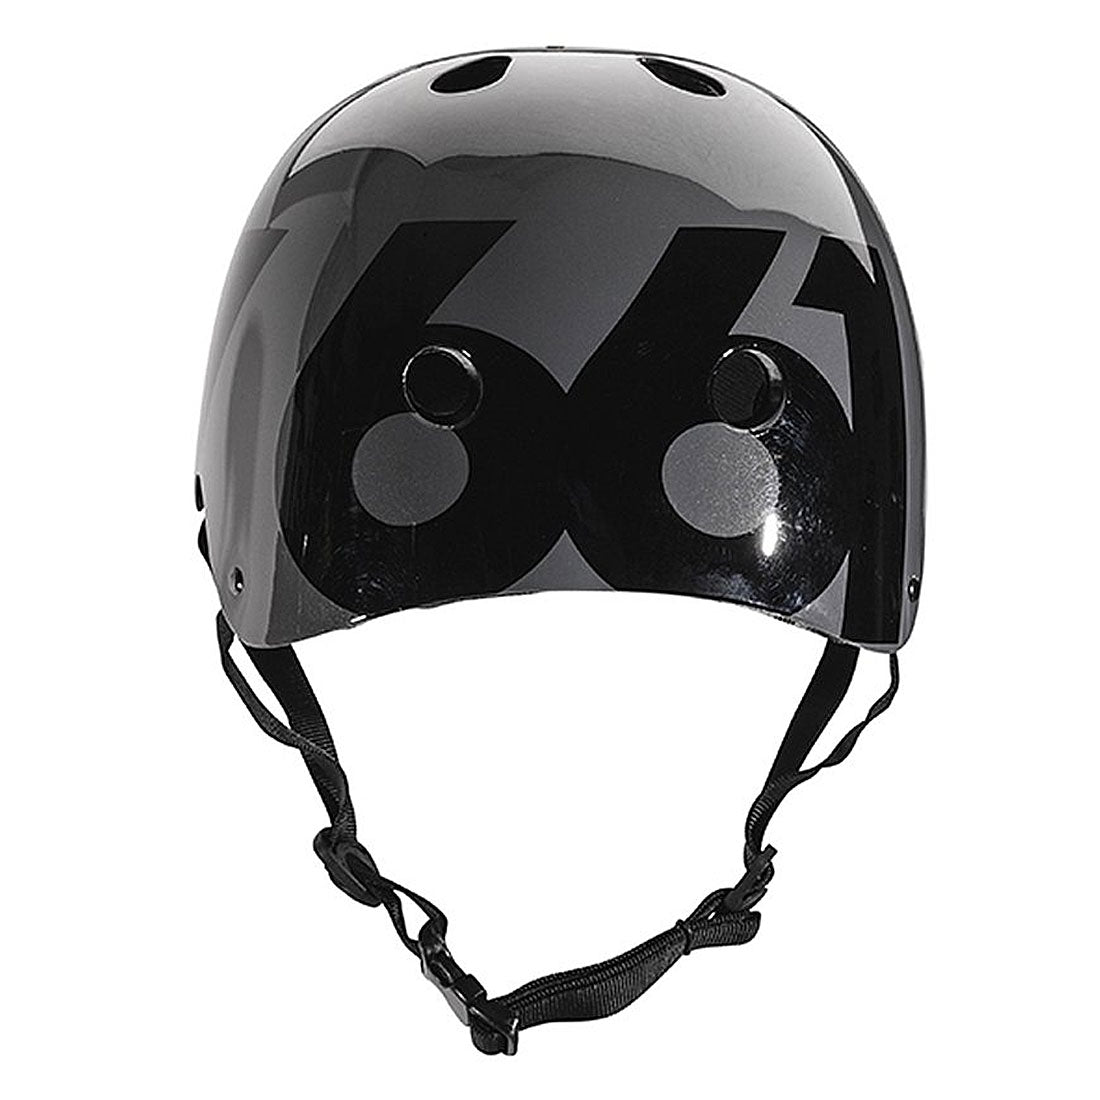 661 Dirt Lid Helmet - Black - L/XL Helmets